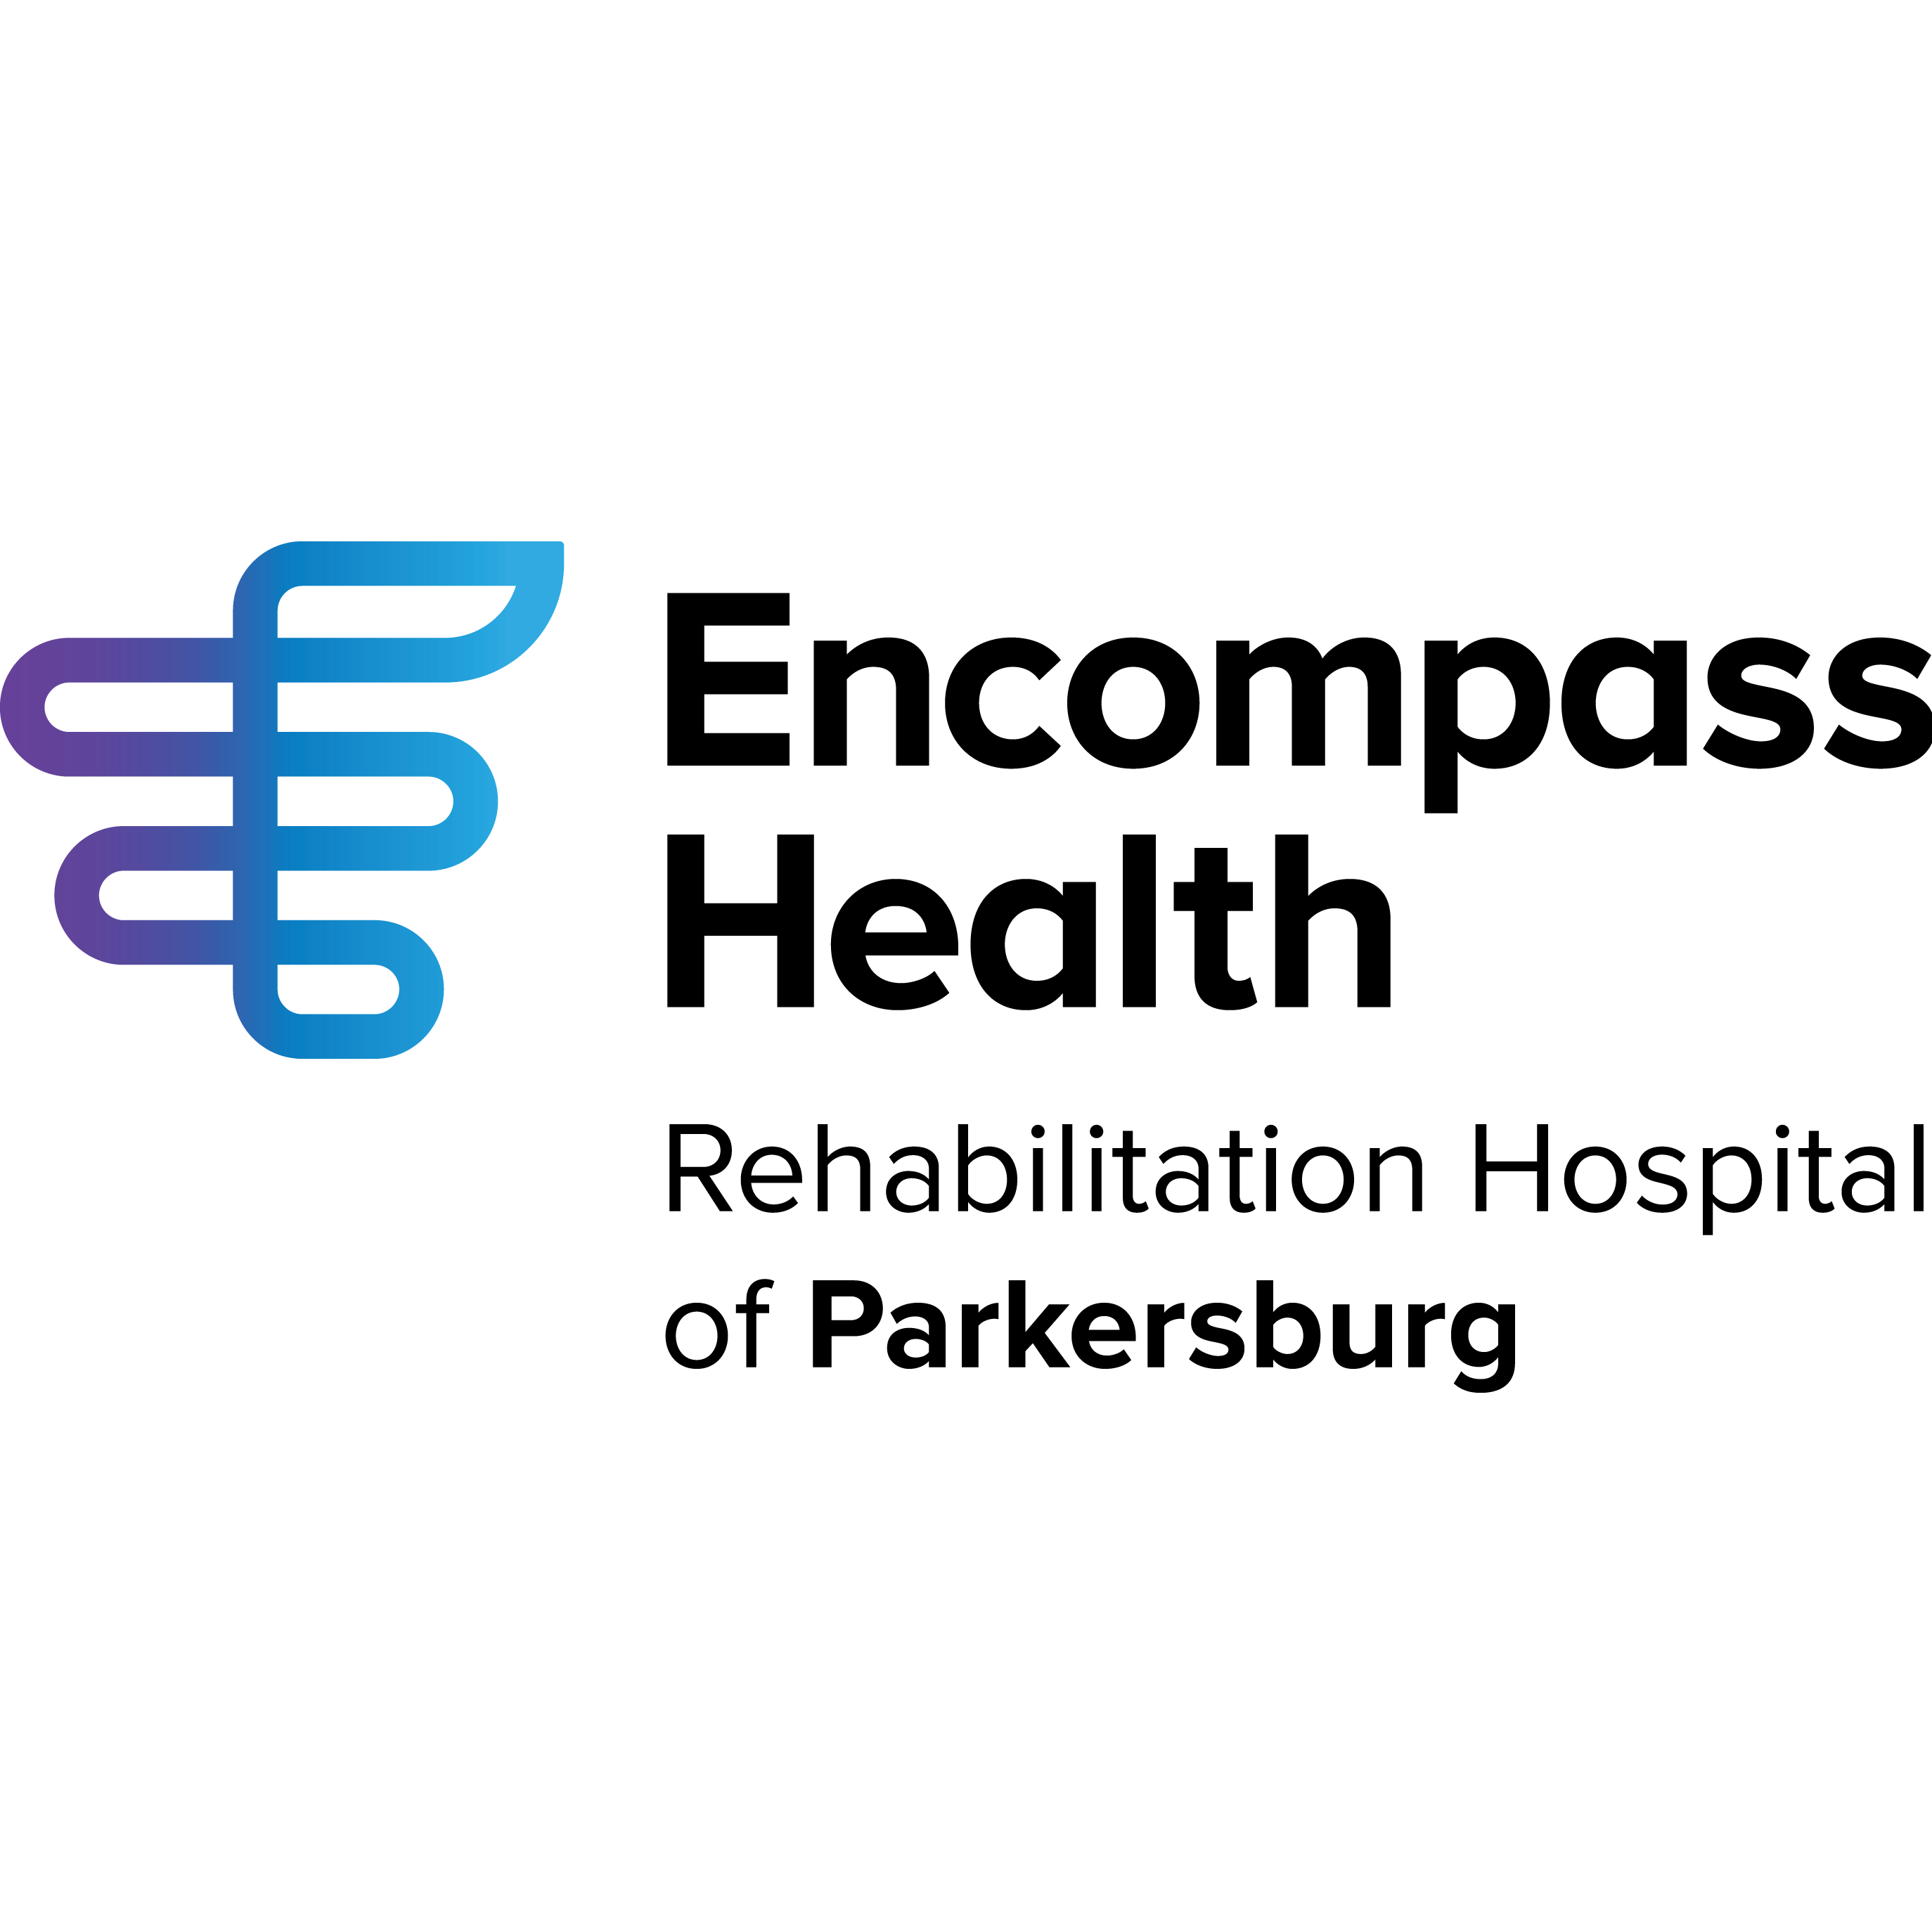 Encompass Health Rehabilitation Hospital of Parkersburg